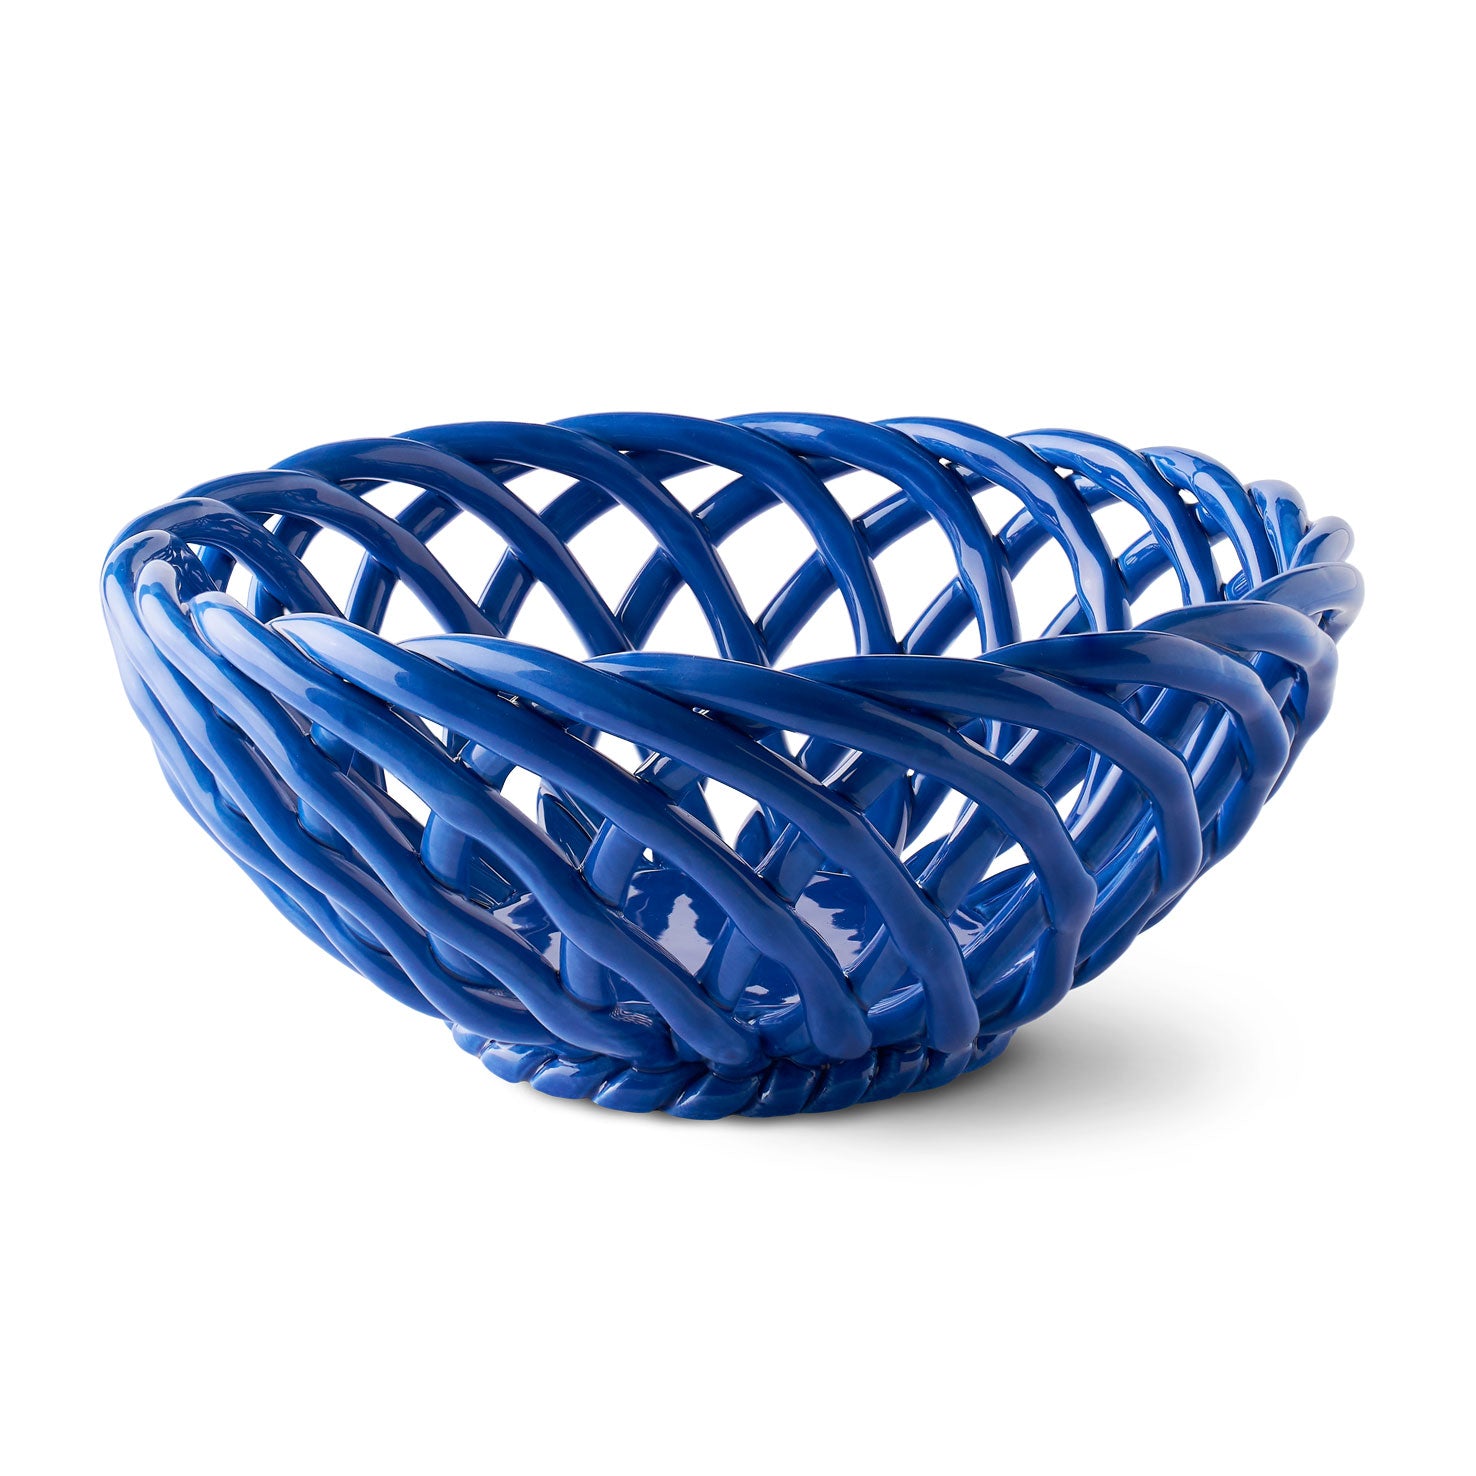 Octaevo Sicilia Ceramic Basket Large - Blue